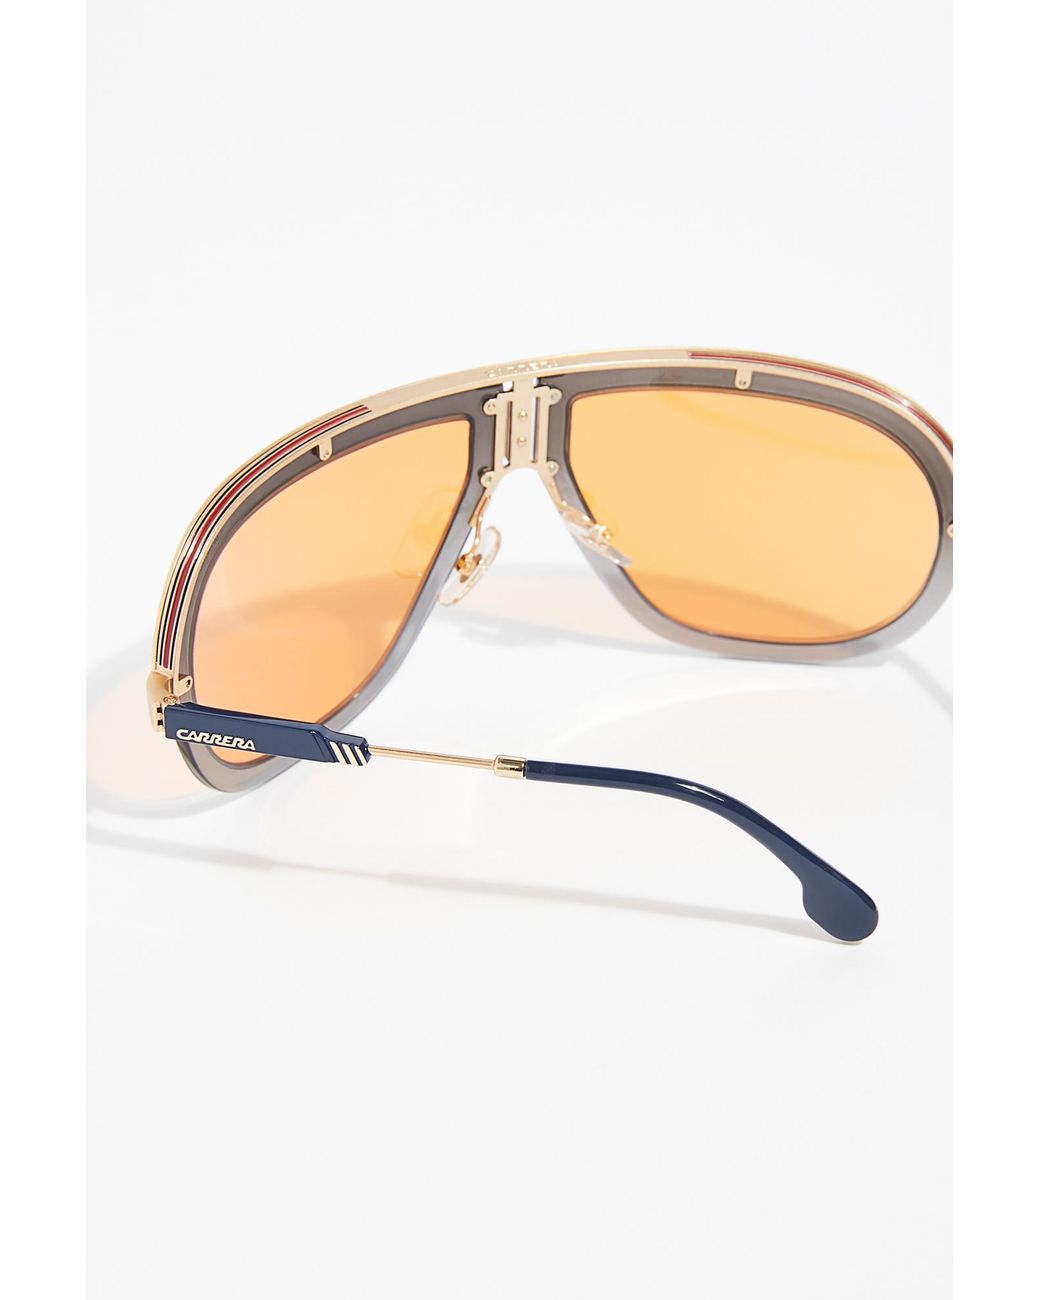 Free People Carrera Americana Sunglasses in Orange | Lyst